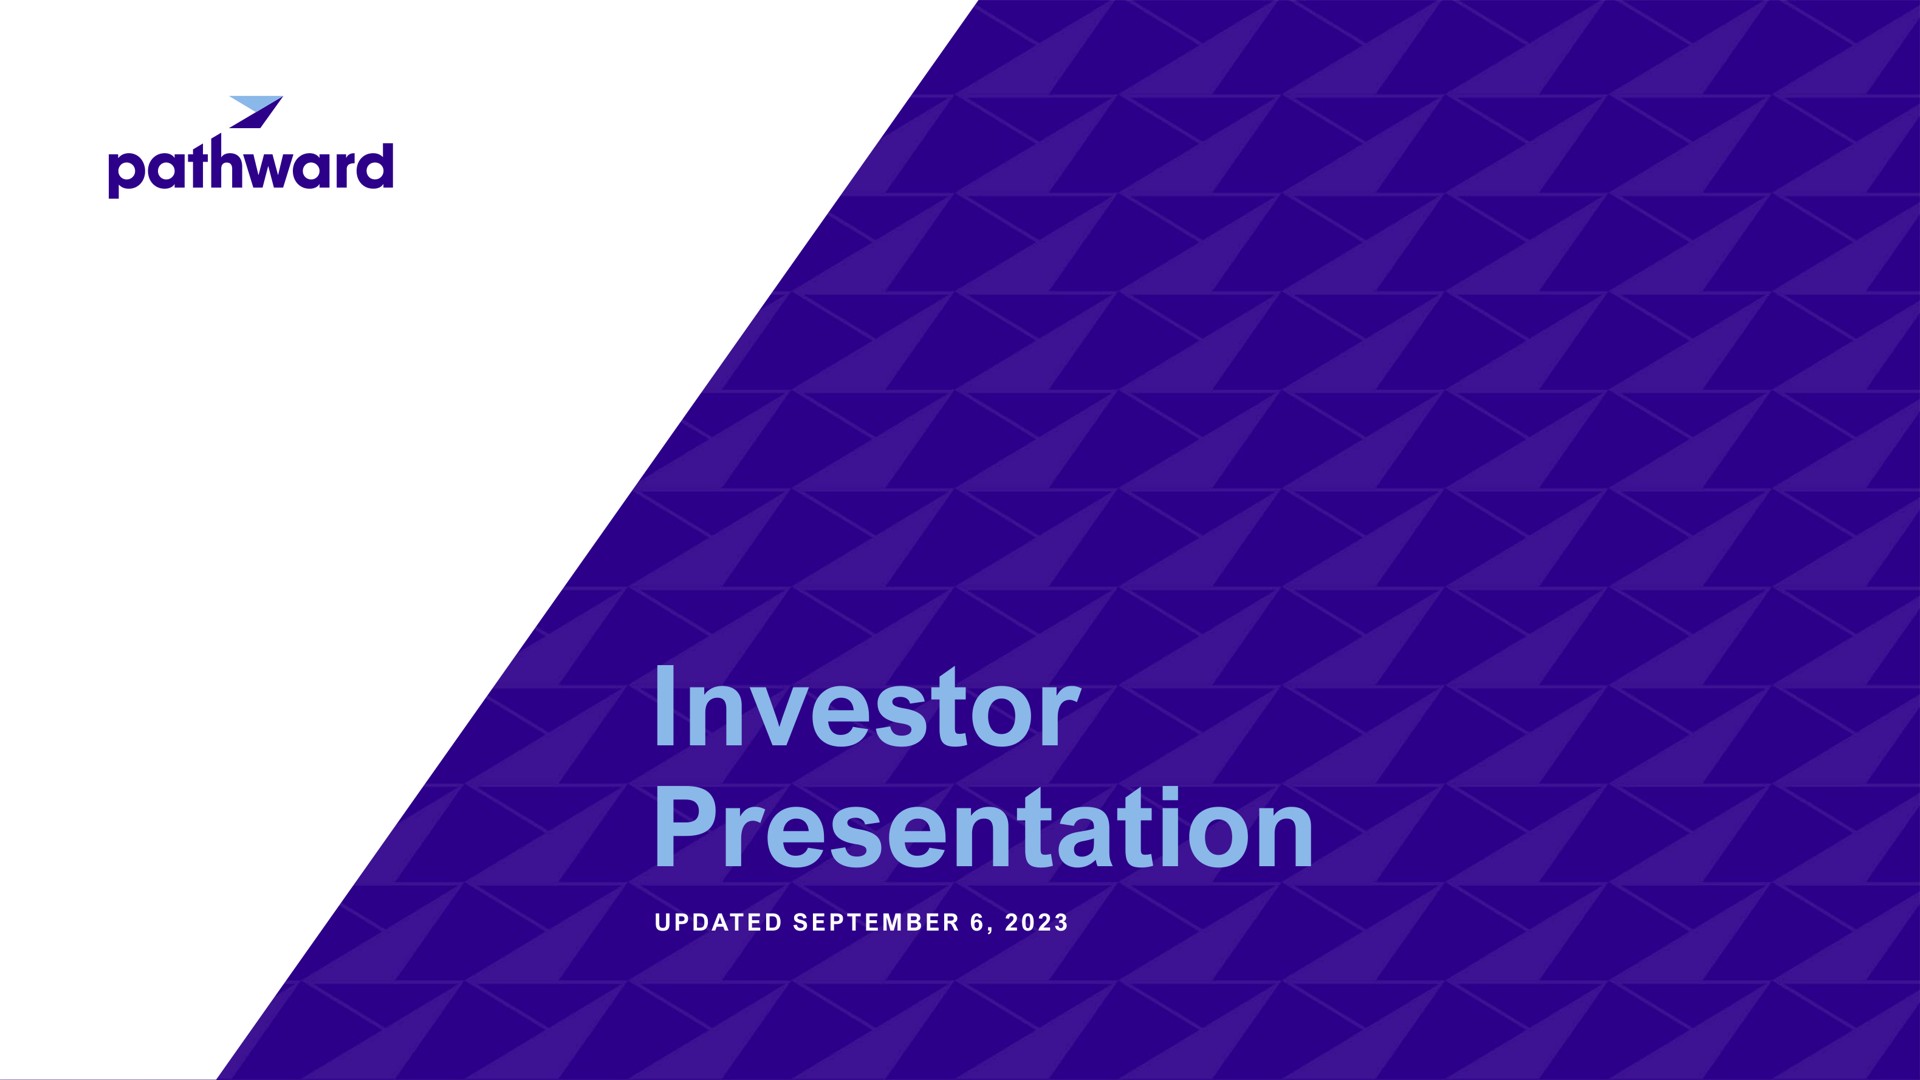 investor presentation bhat | Pathward Financial